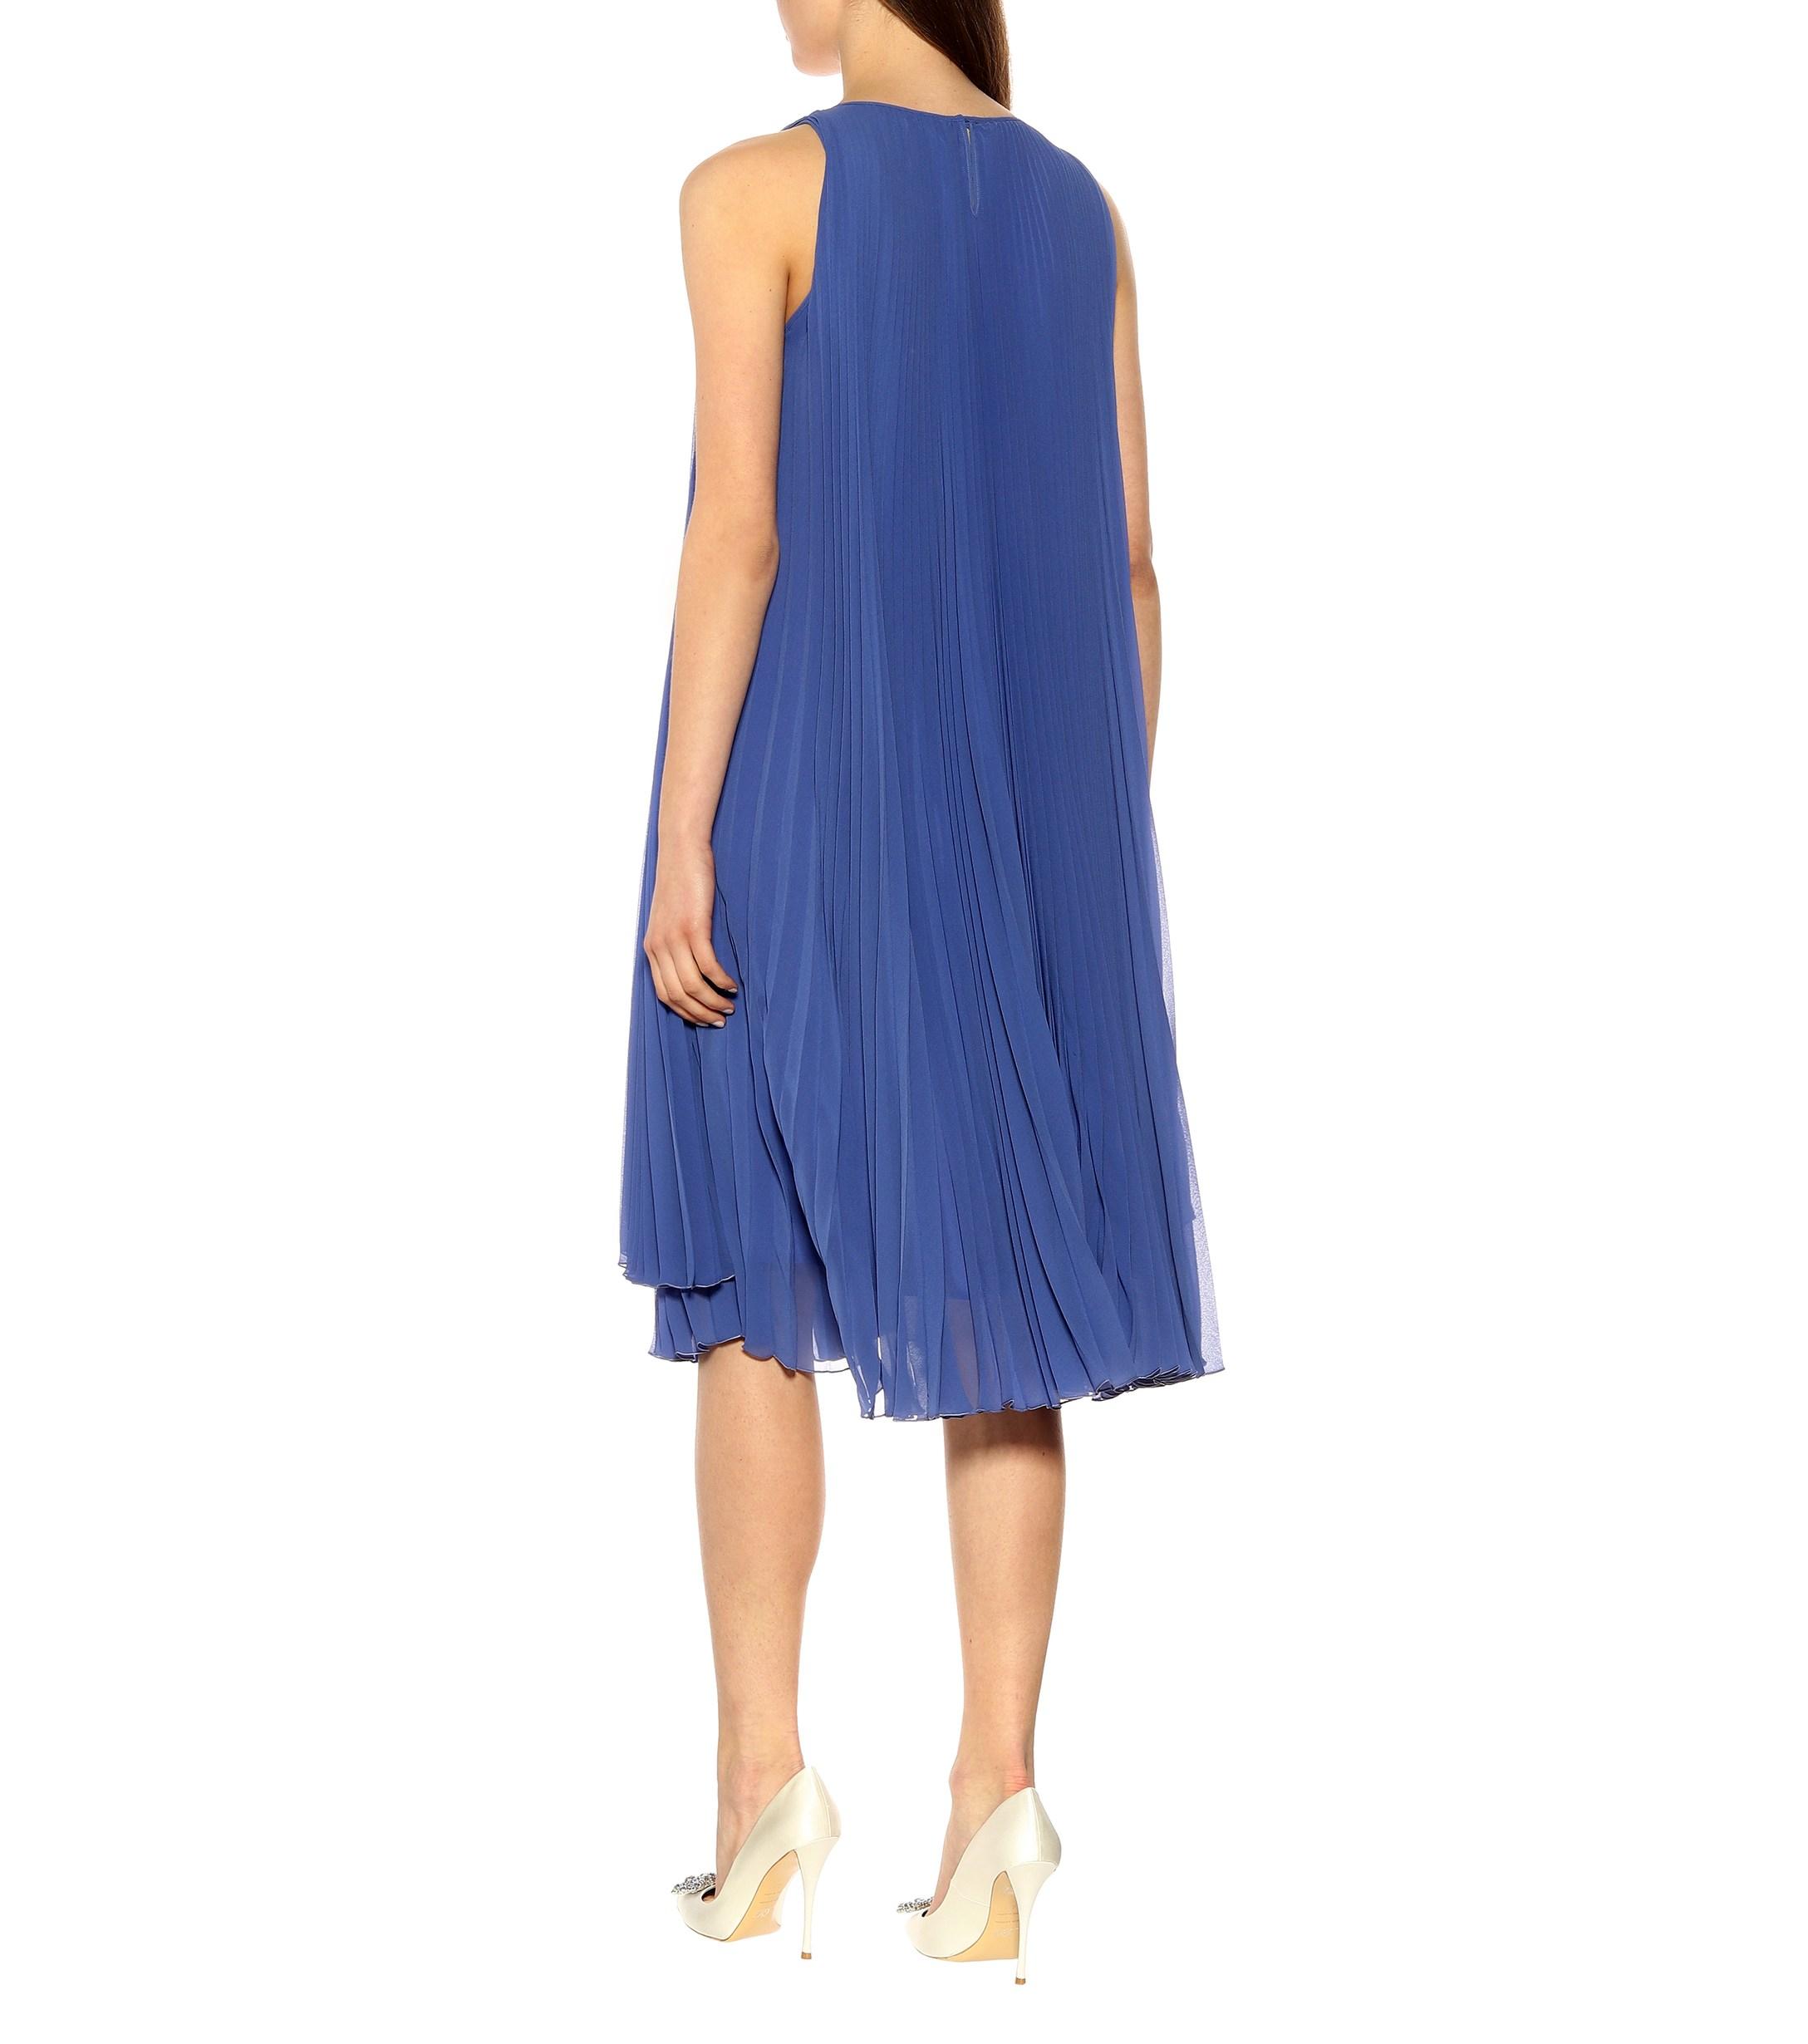 Max Mara Clelia Double Georgette Dress in Blue - Lyst